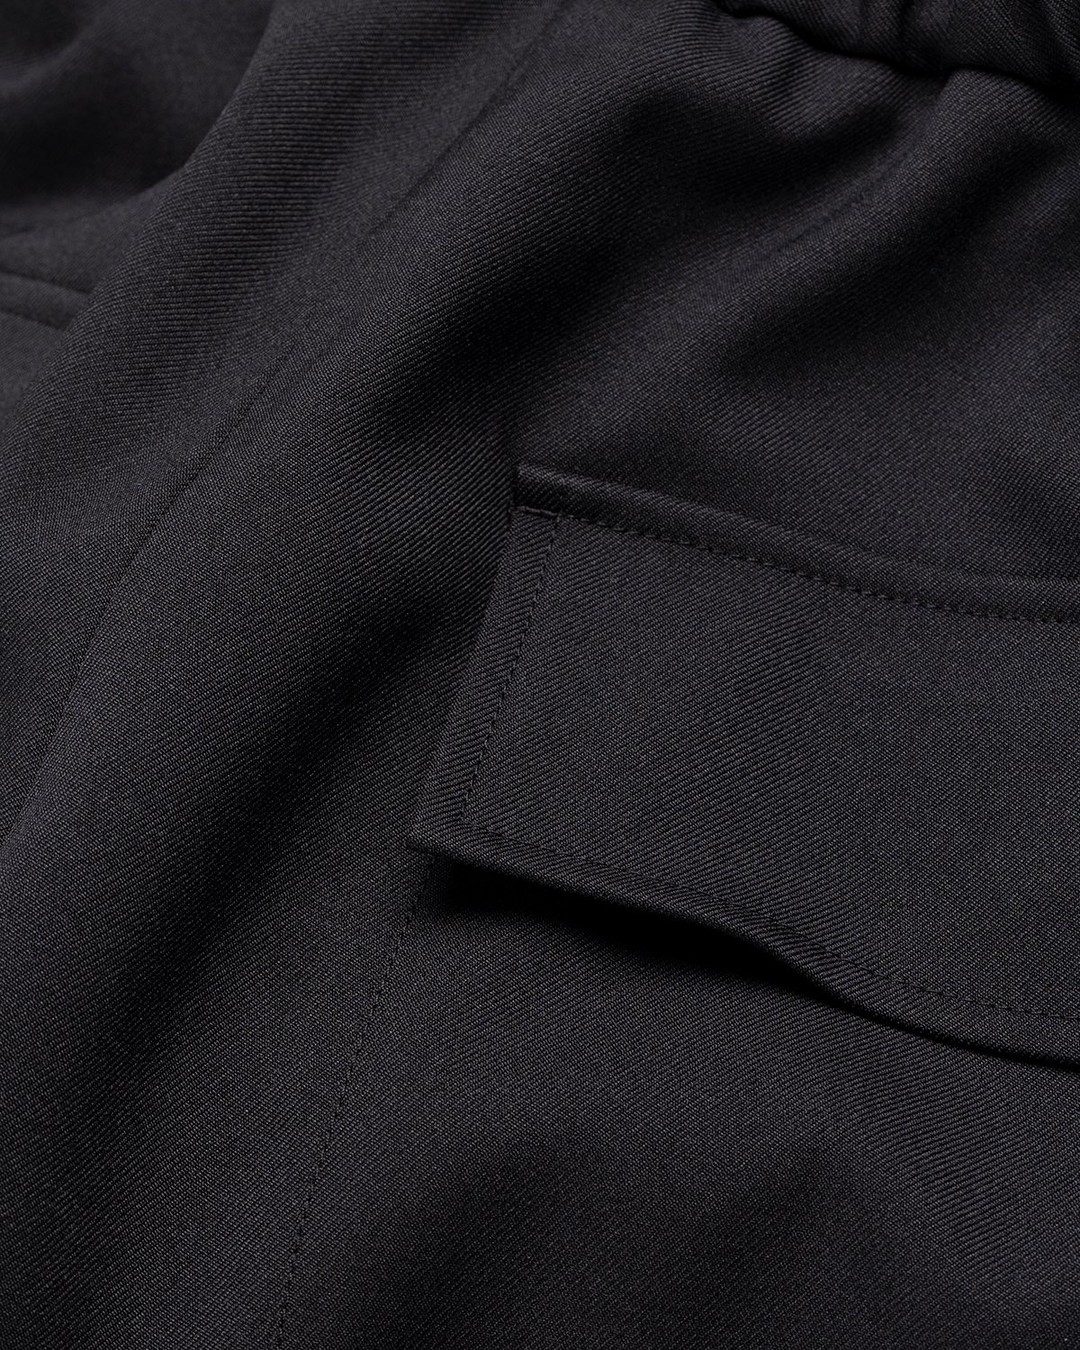 Jil Sander – Trouser D 09 AW 20 Black - Pants - Black - Image 5